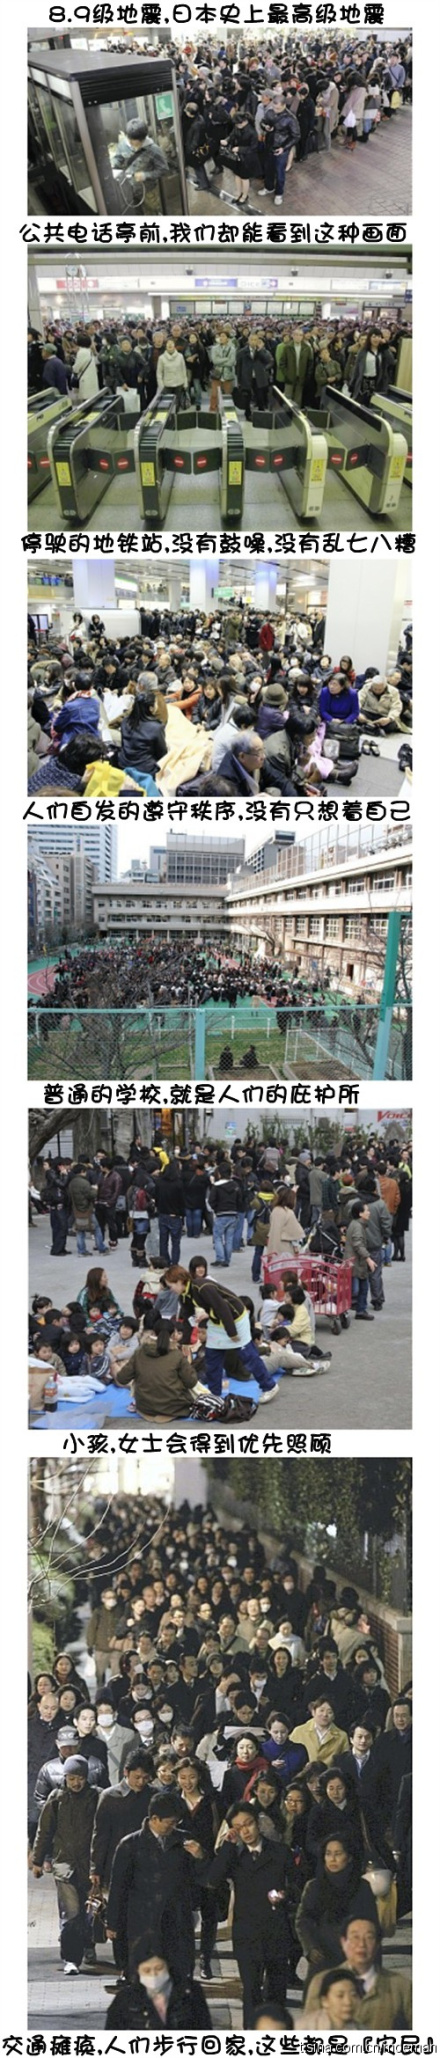 Chinese Netizens Admire Japan's Post-Earthquake Behavior - chinaSMACK